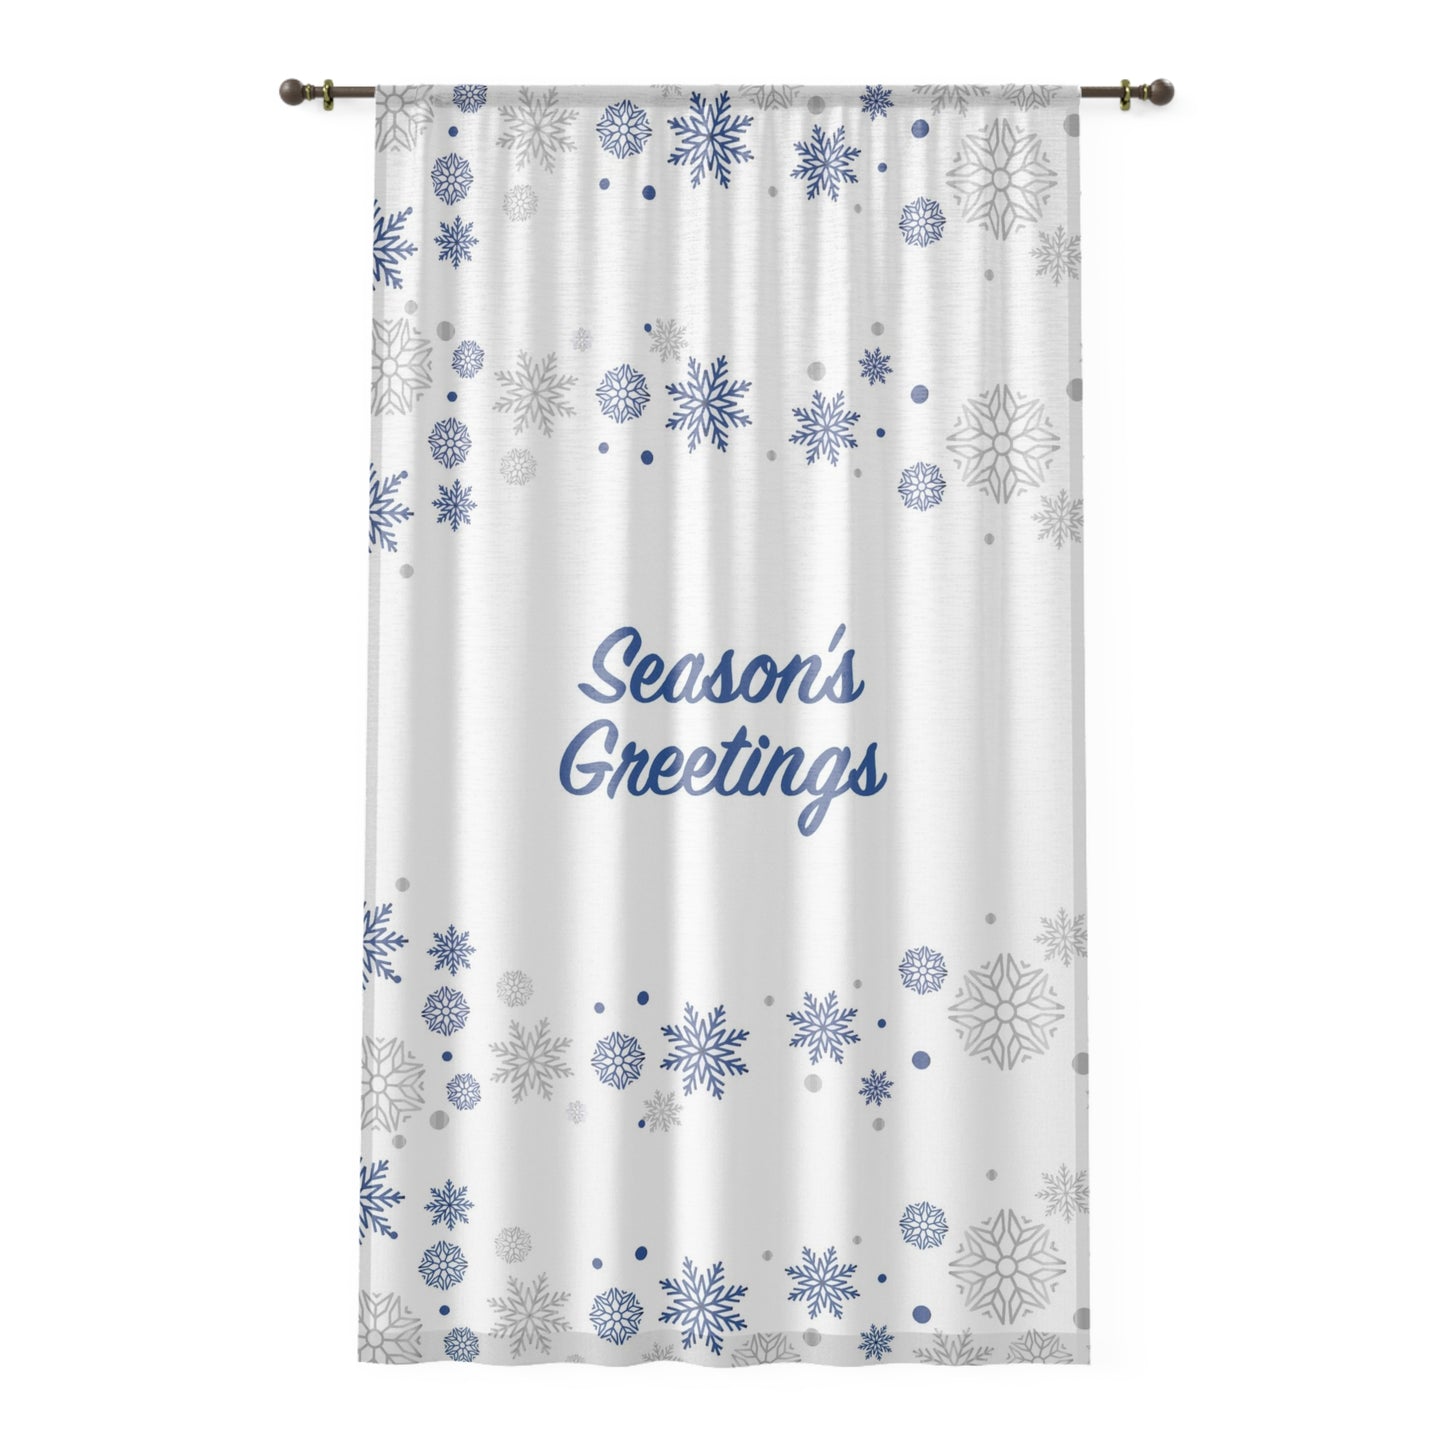 Season's Greetings Window Curtain, White